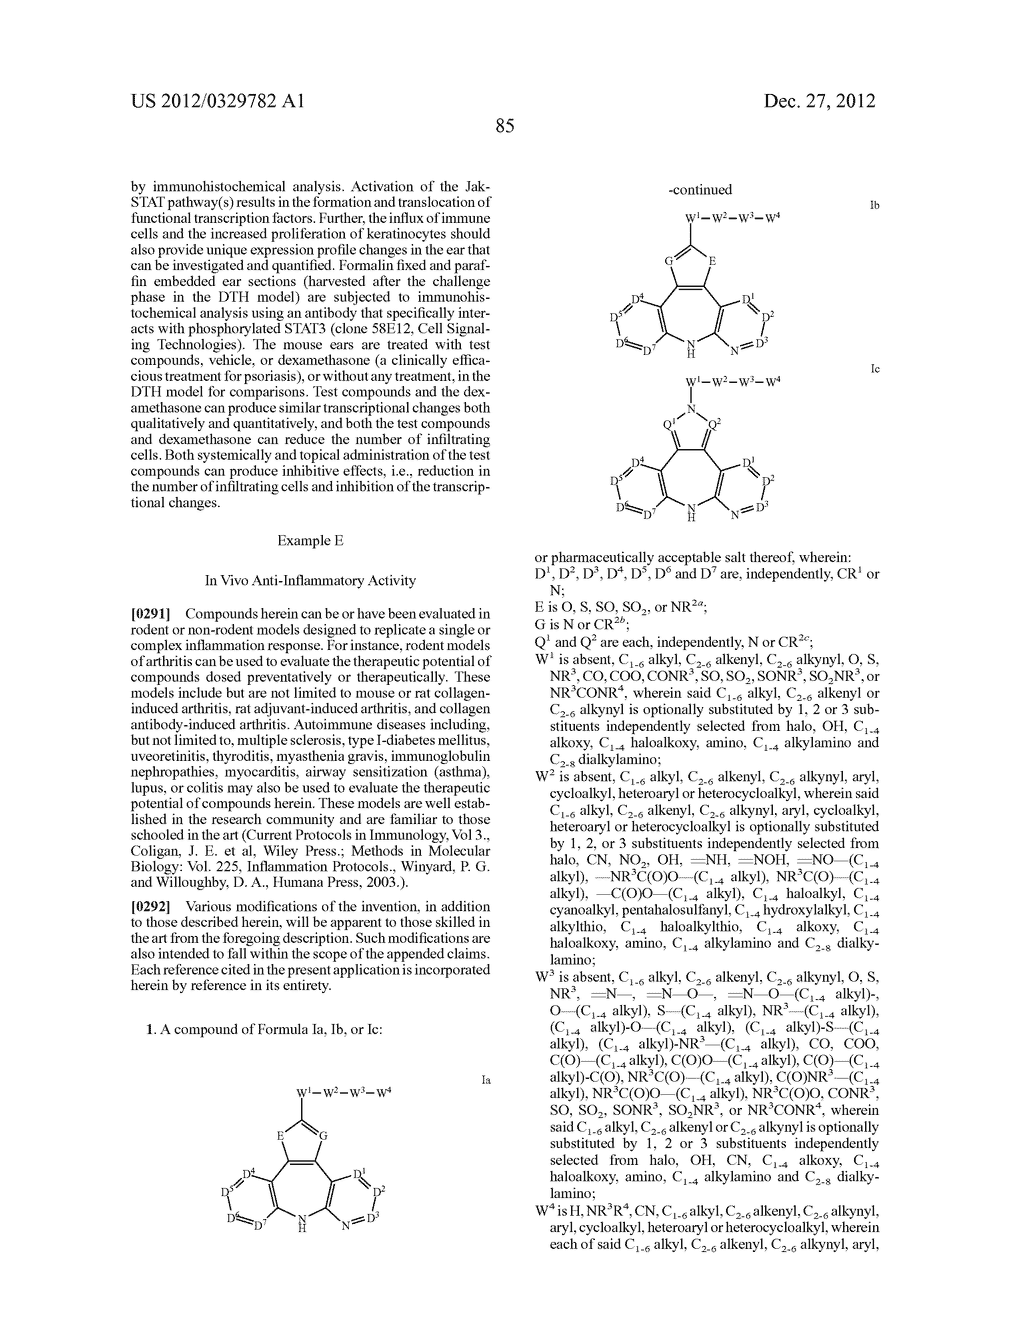 AZEPINE INHIBITORS OF JANUS KINASES - diagram, schematic, and image 86